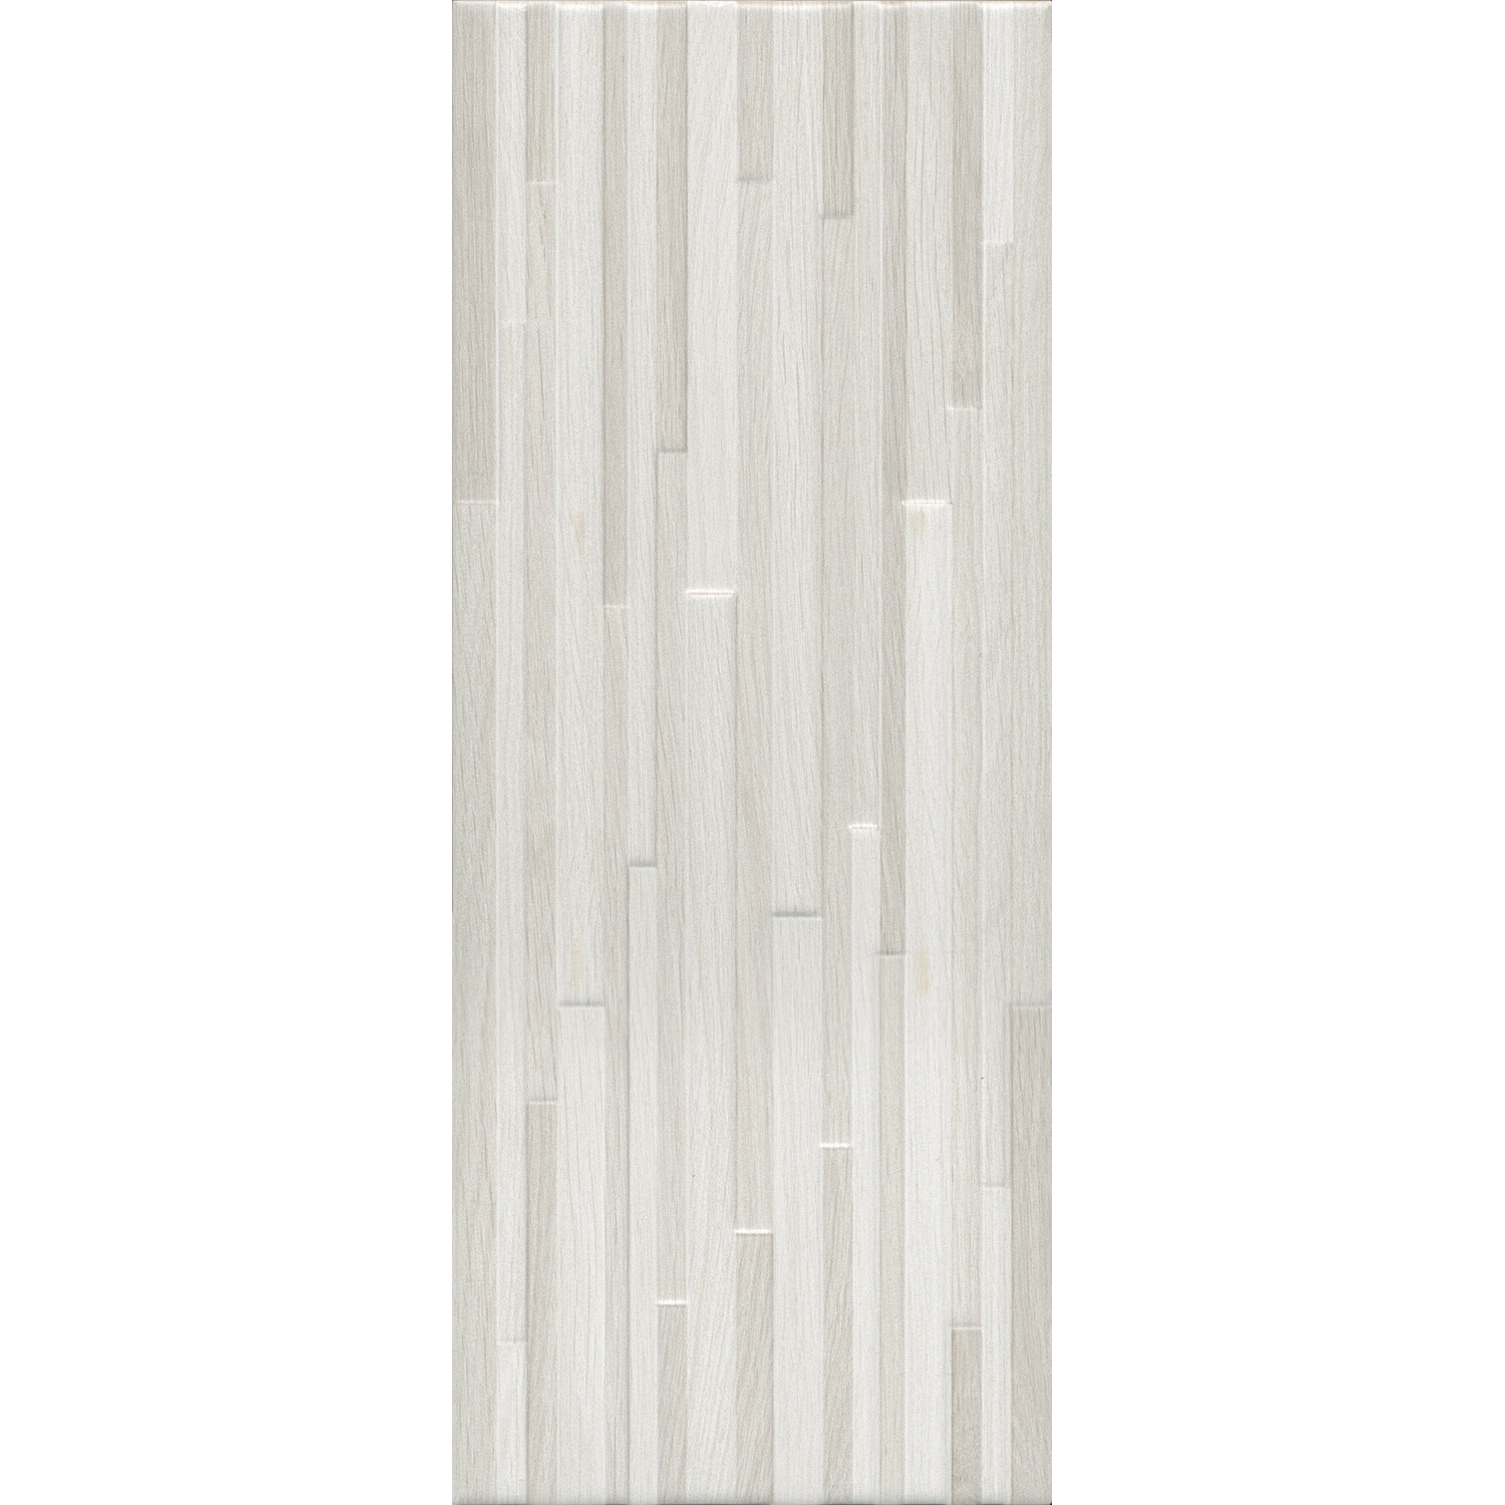 плитка настенная kerama marazzi сигма 20x60 см 1 2 м² глянцевая белый полосы Плитка Kerama Marazzi Ауленти беж светлый структура 7220 20x50 см